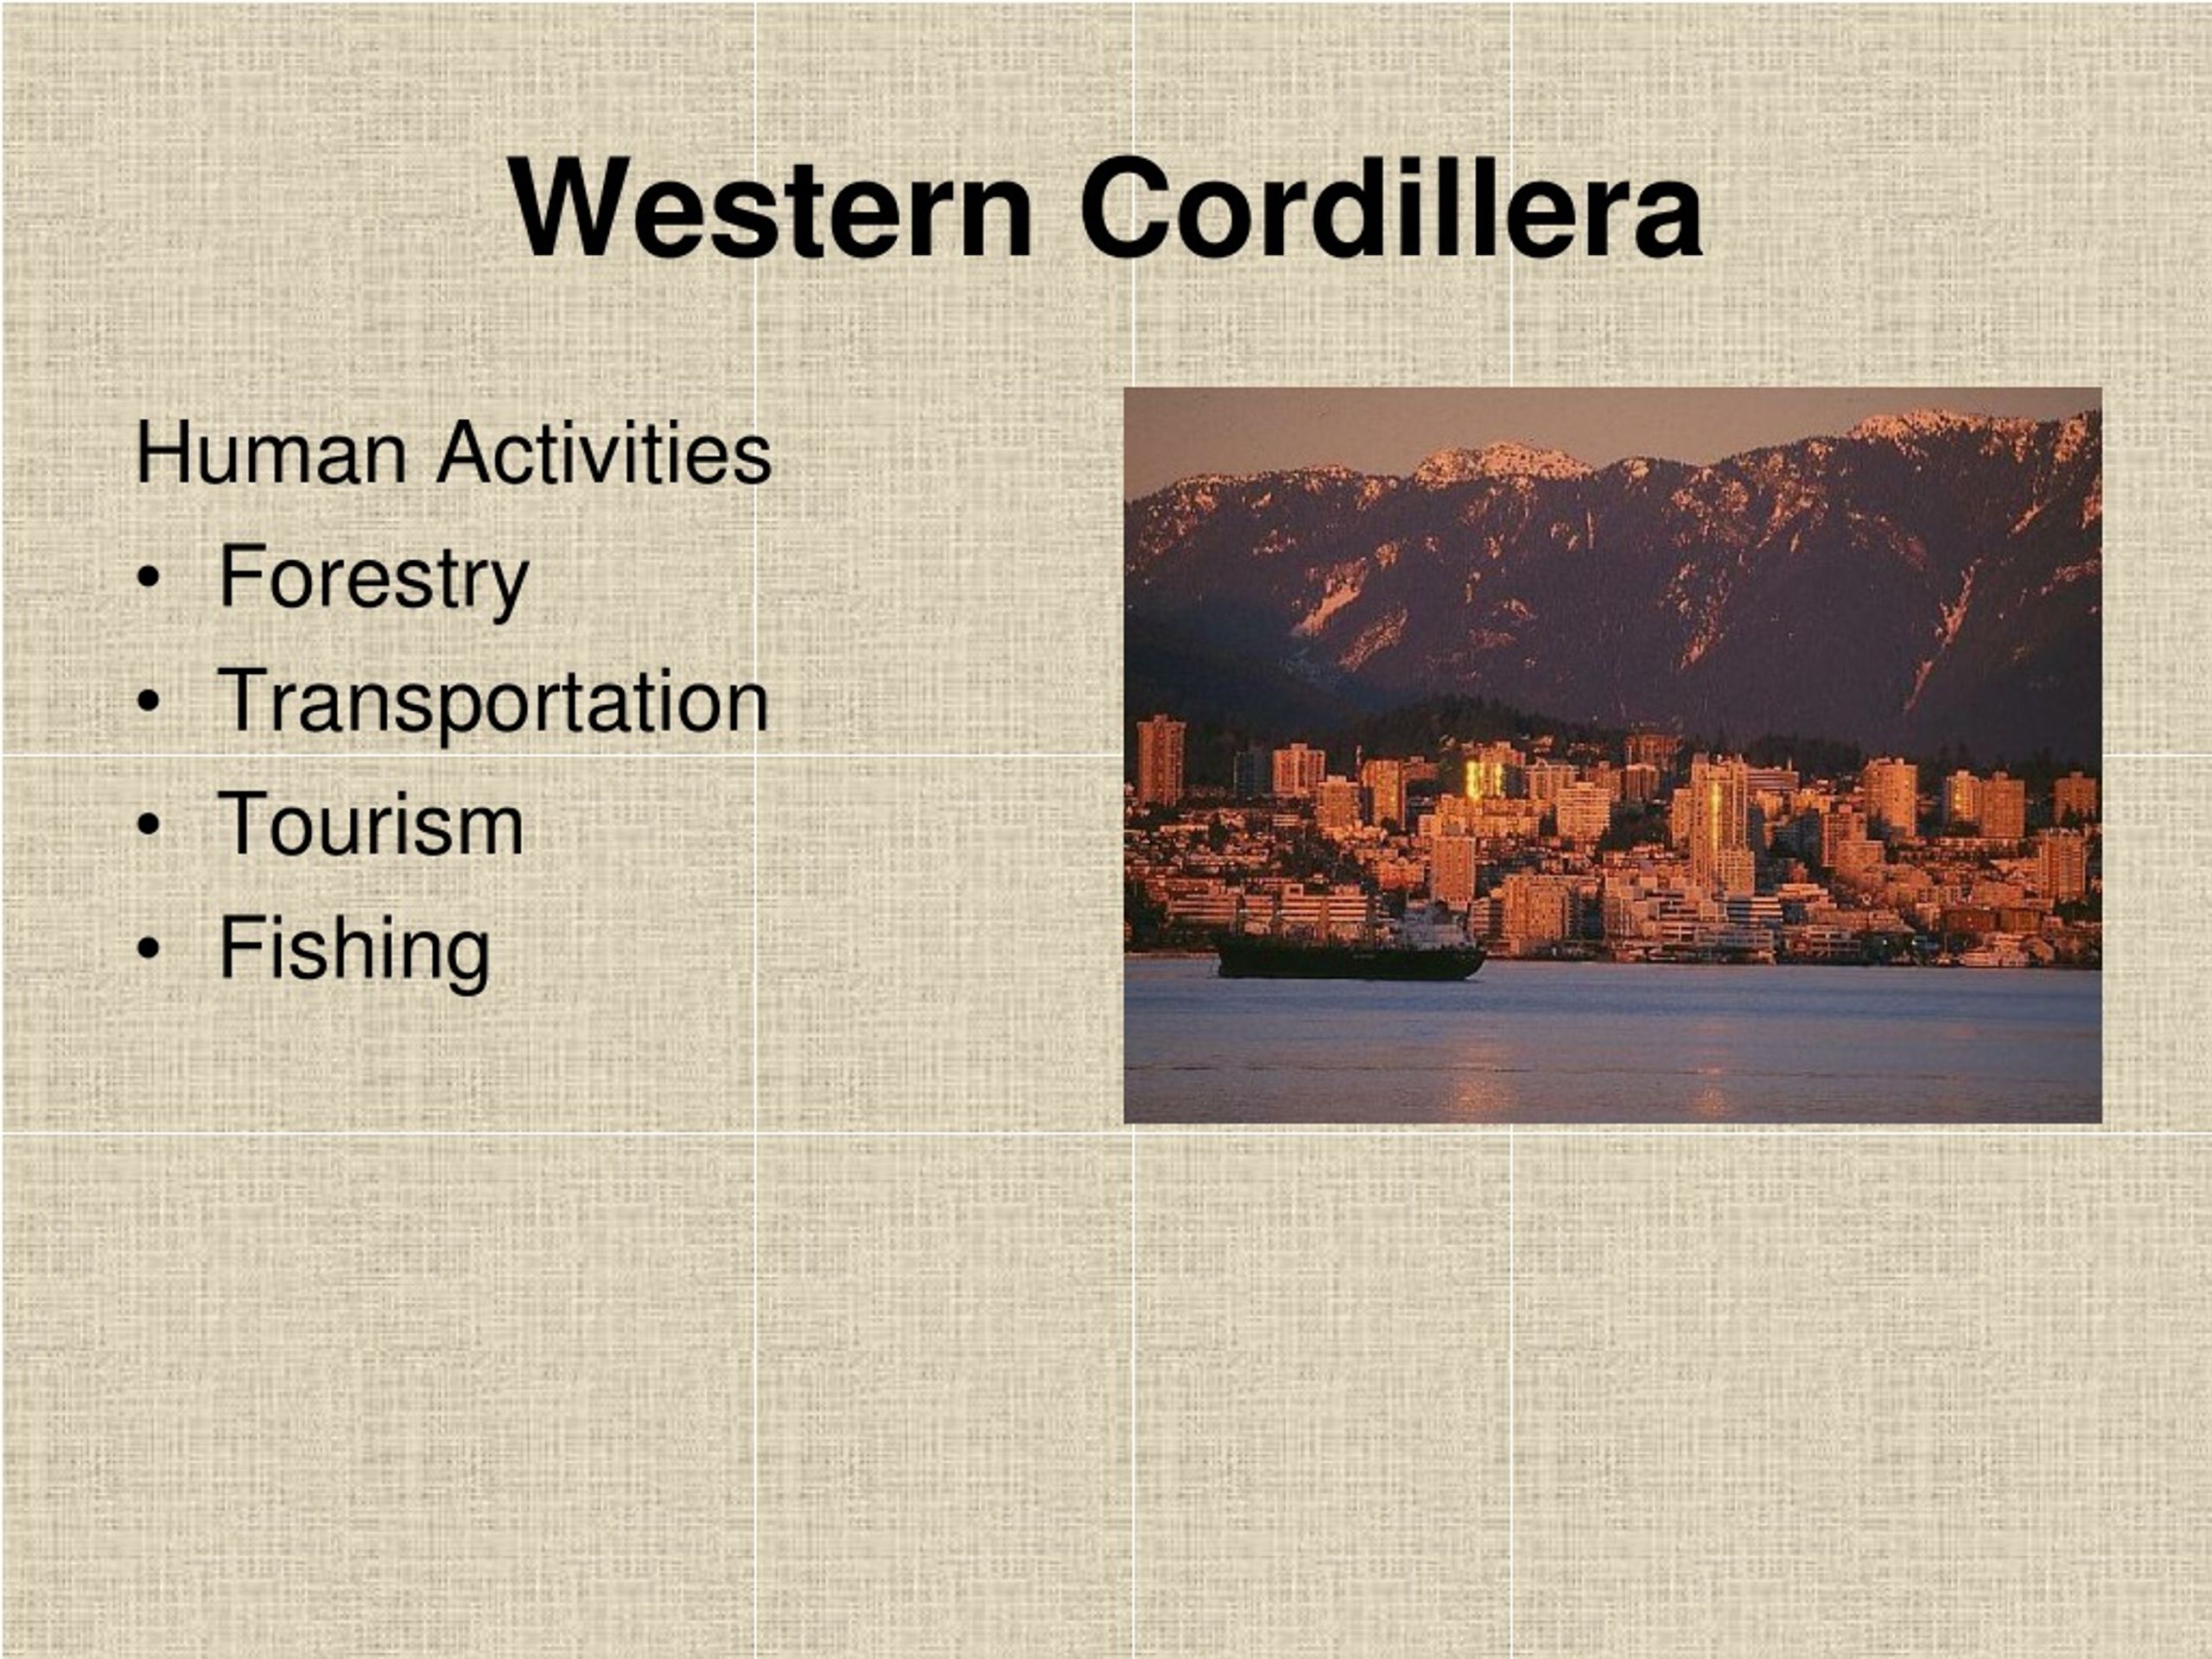 Western Cordillera Topography